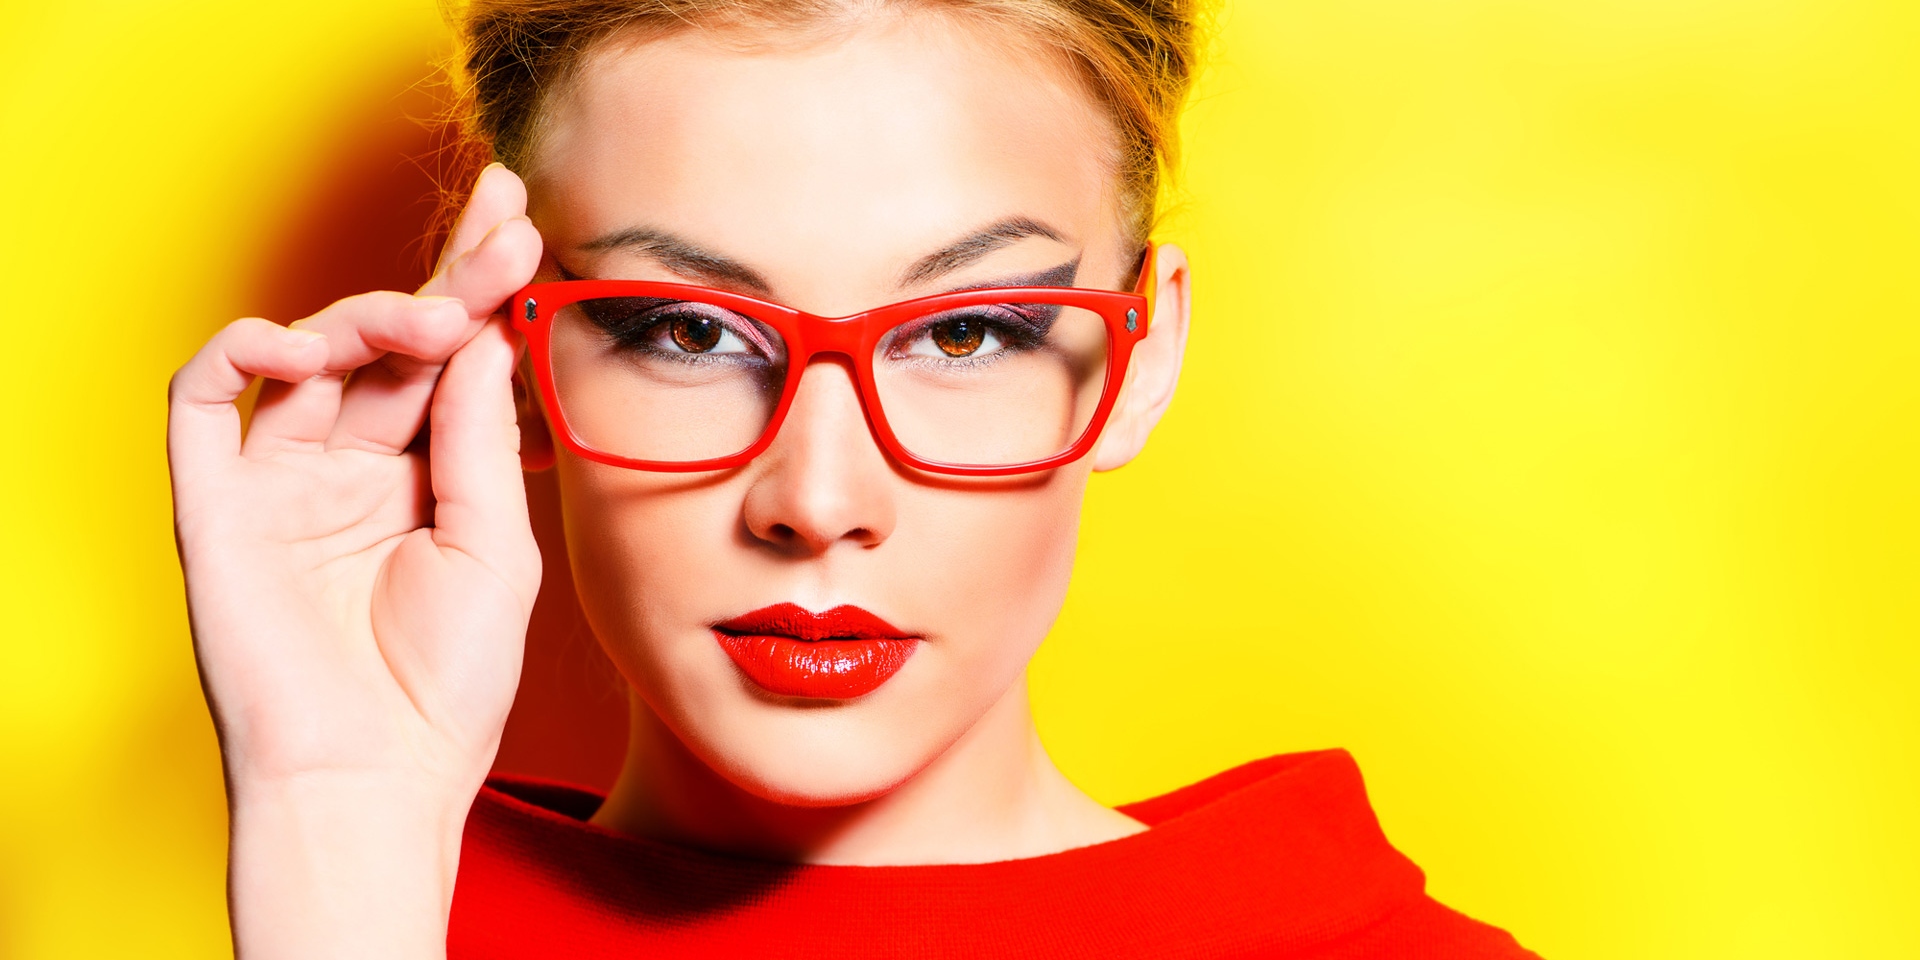 Makeup tips for eyeglass wearers and contact lens wearers